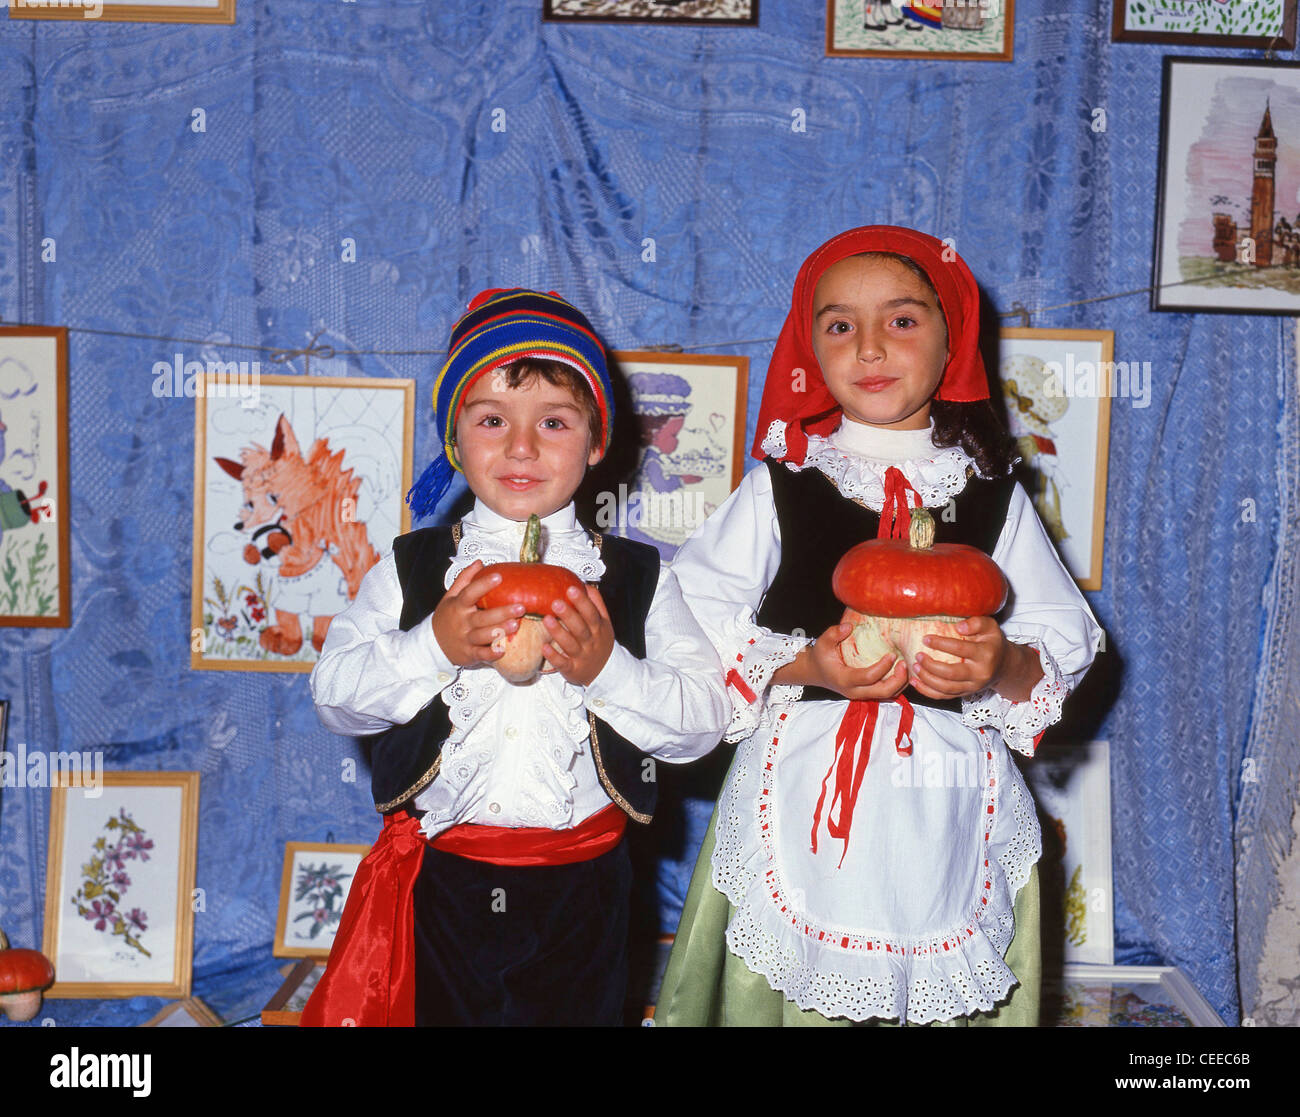 Children in traditional costume, Sorrento, Province of Naples, Campania Region, Italy Stock Photo